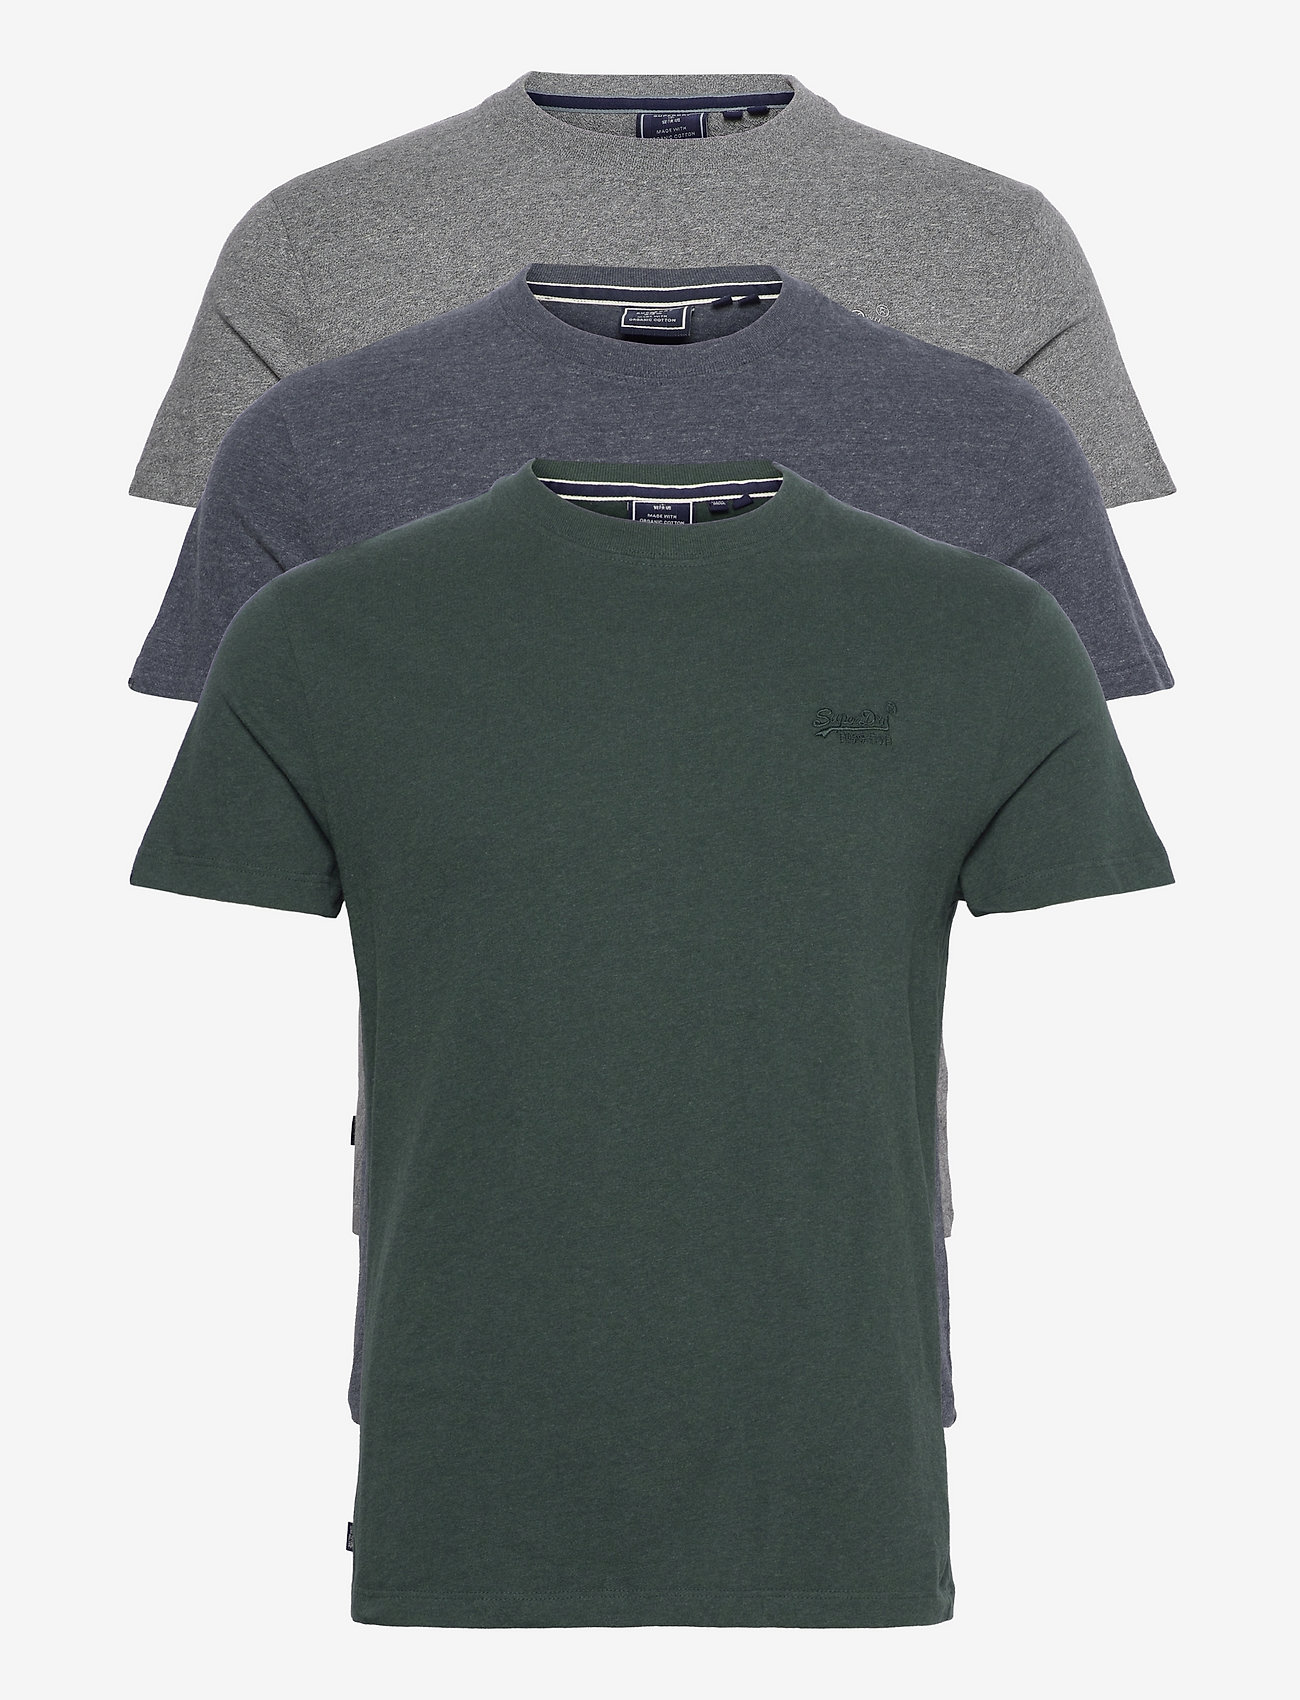 Superdry - ESSENTIAL TRIPLE PACK T-SHIRT - basic t-shirts - buckgreenmrl/nvymrl/noosgrymrl - 0